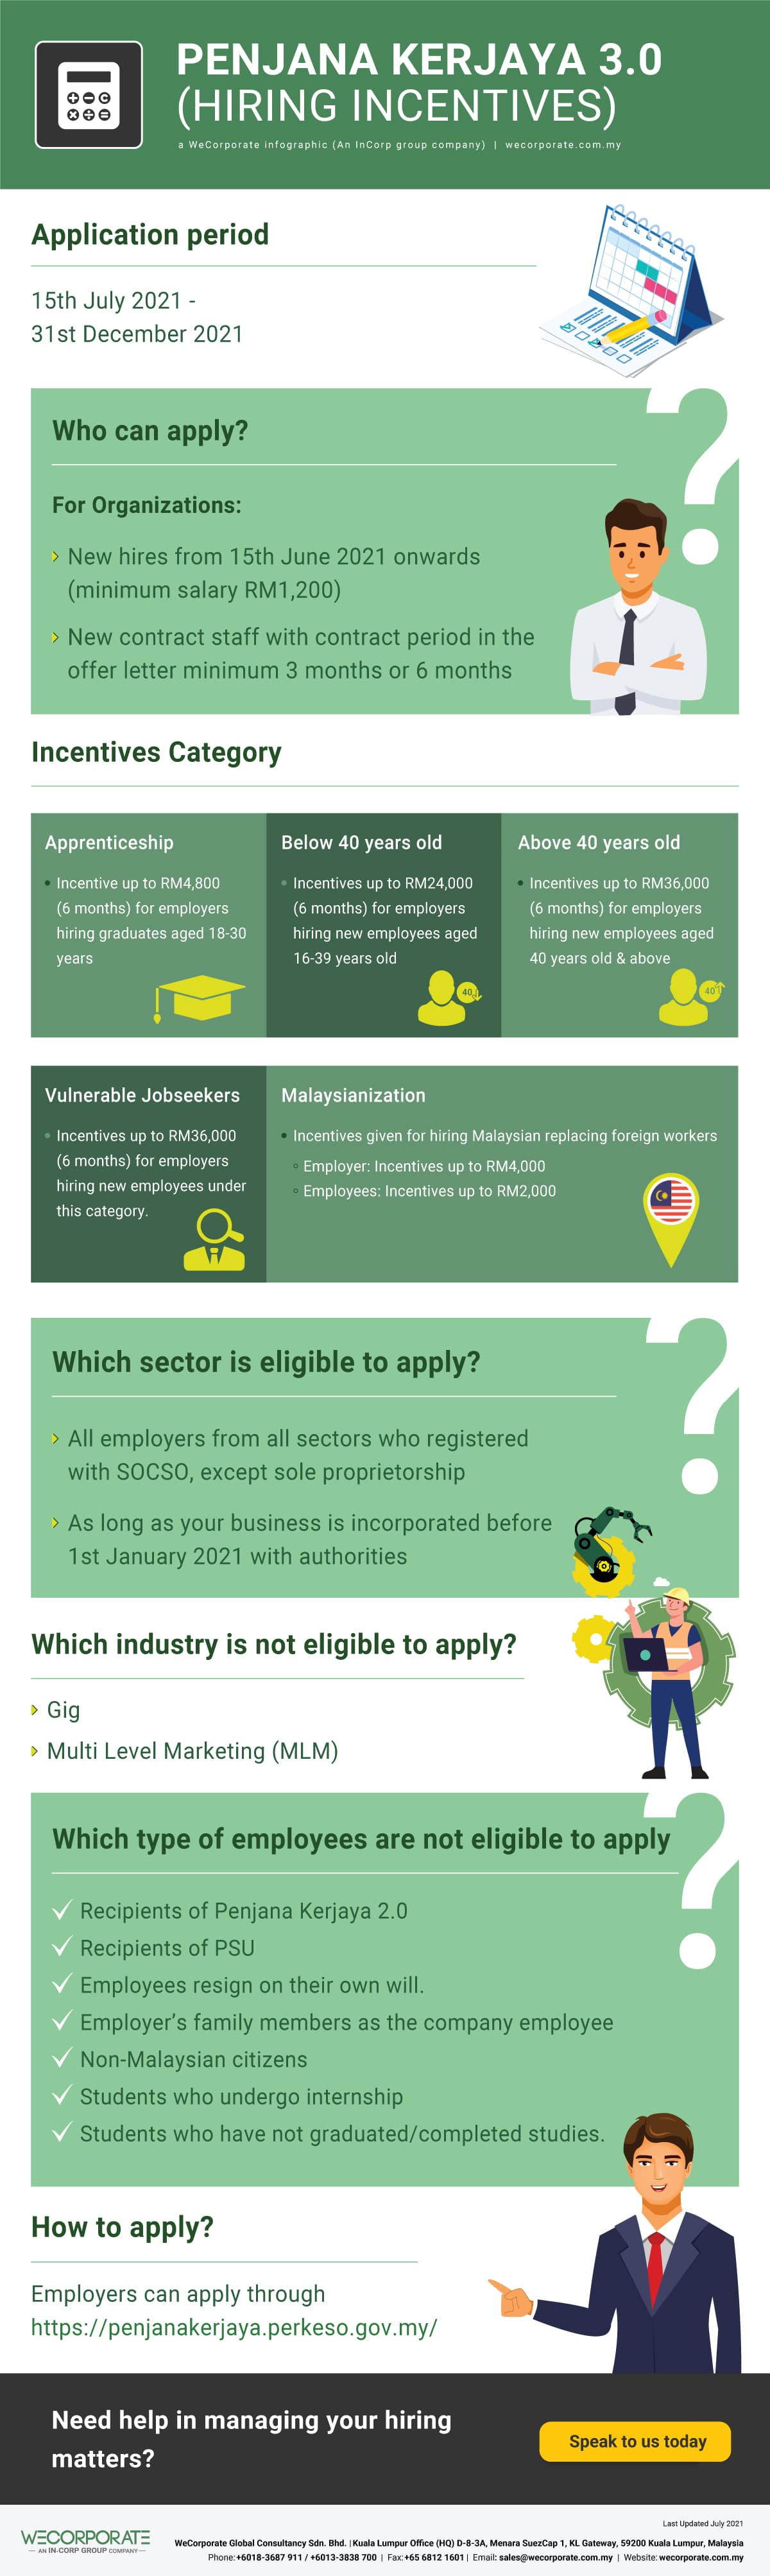 Penjana Kerjaya 3.0 (Hiring Incentives) Infographic